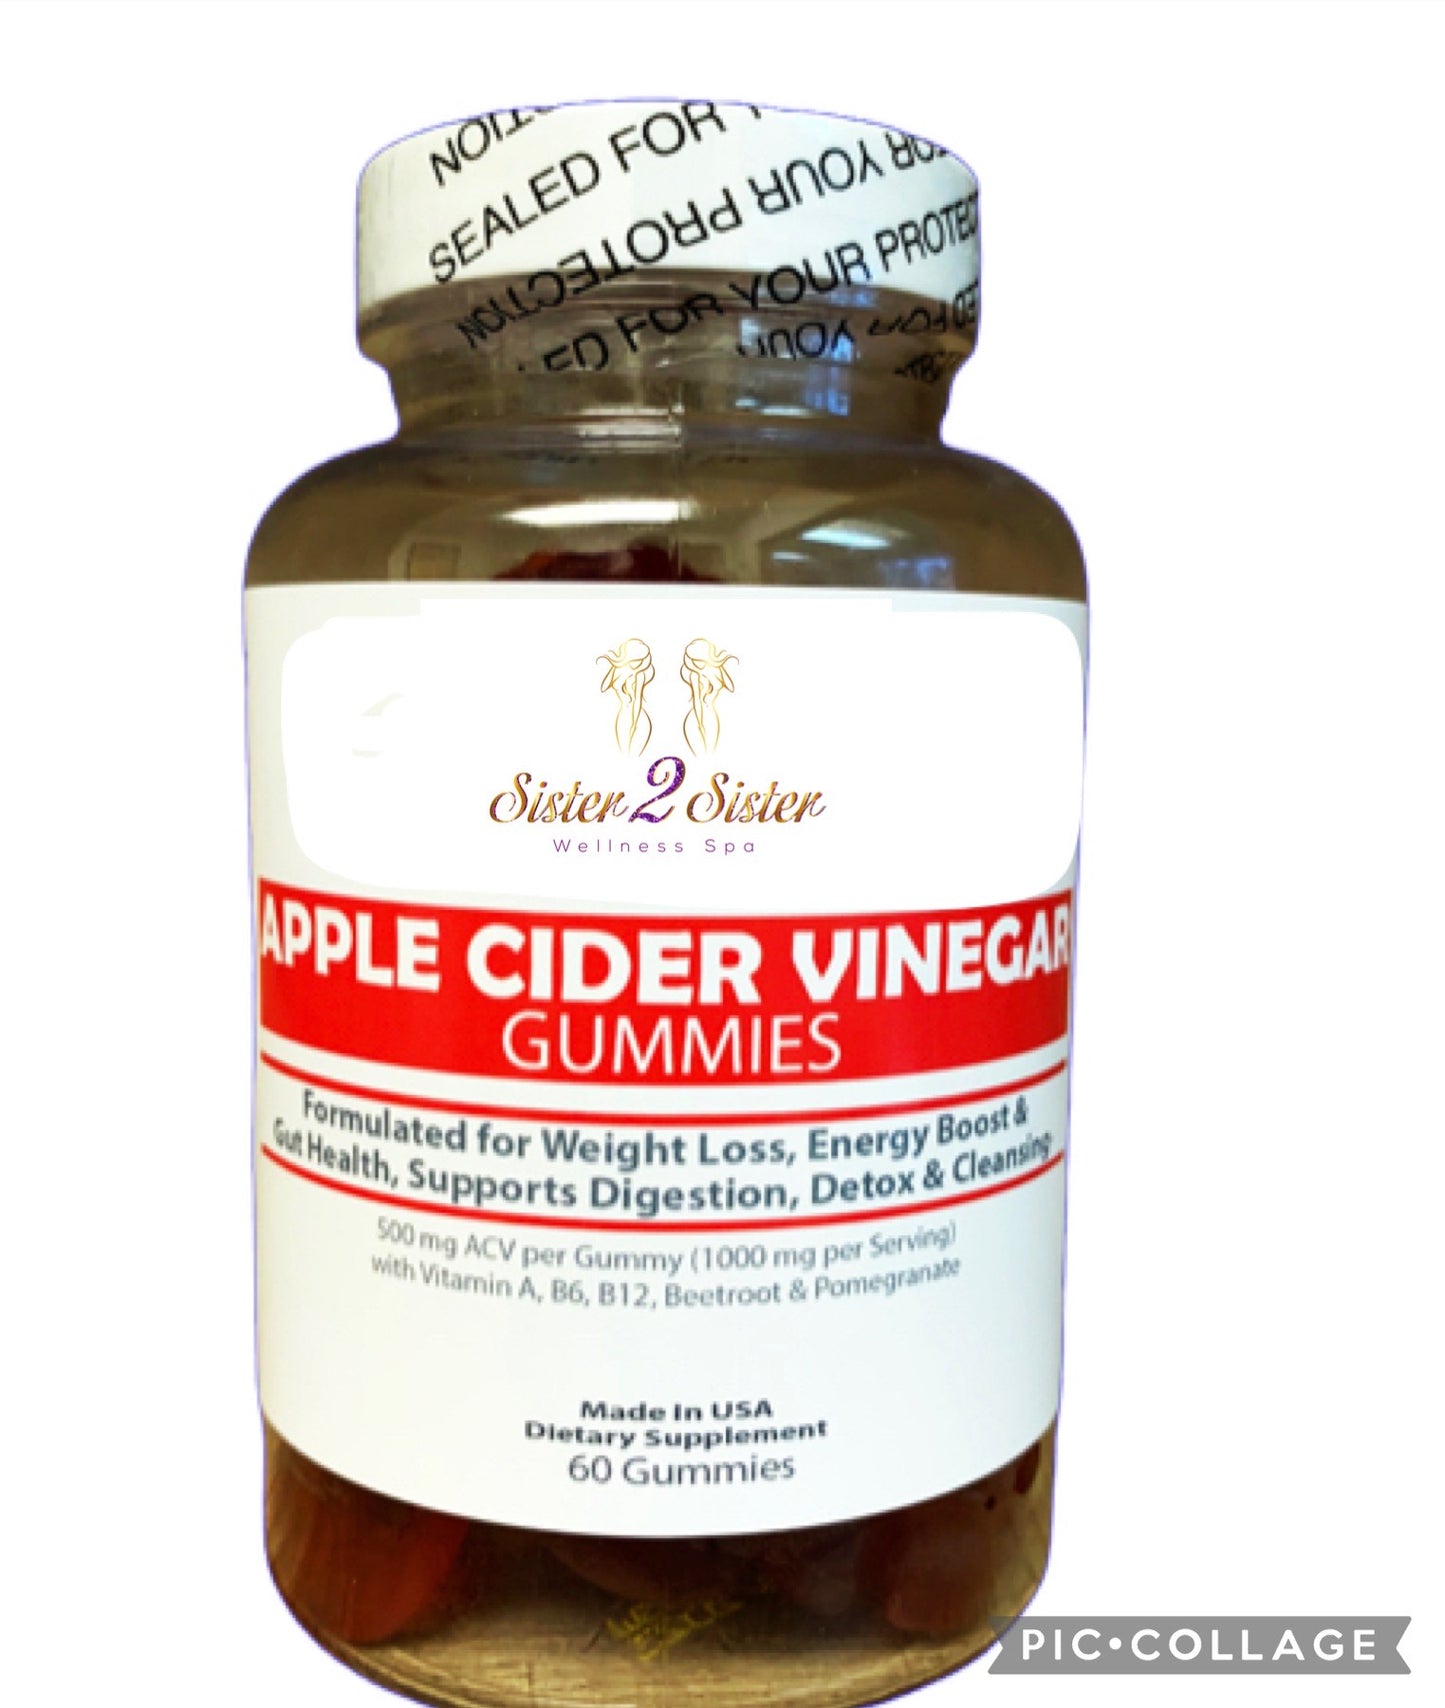 Apple Cider Vinegar gummies